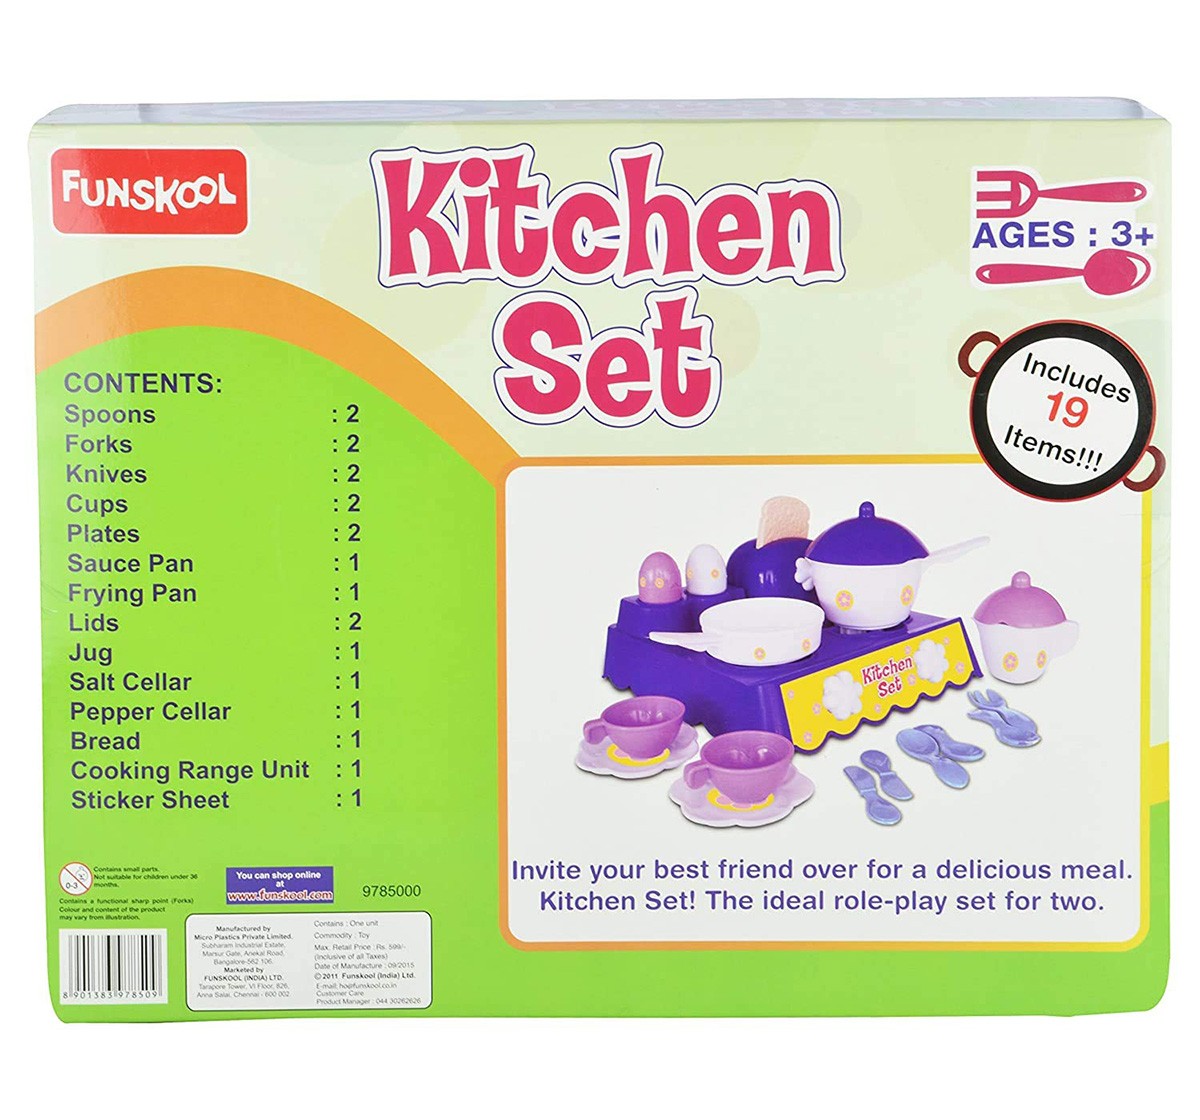 Giggles Kitchen Set for Kids age 3Y+